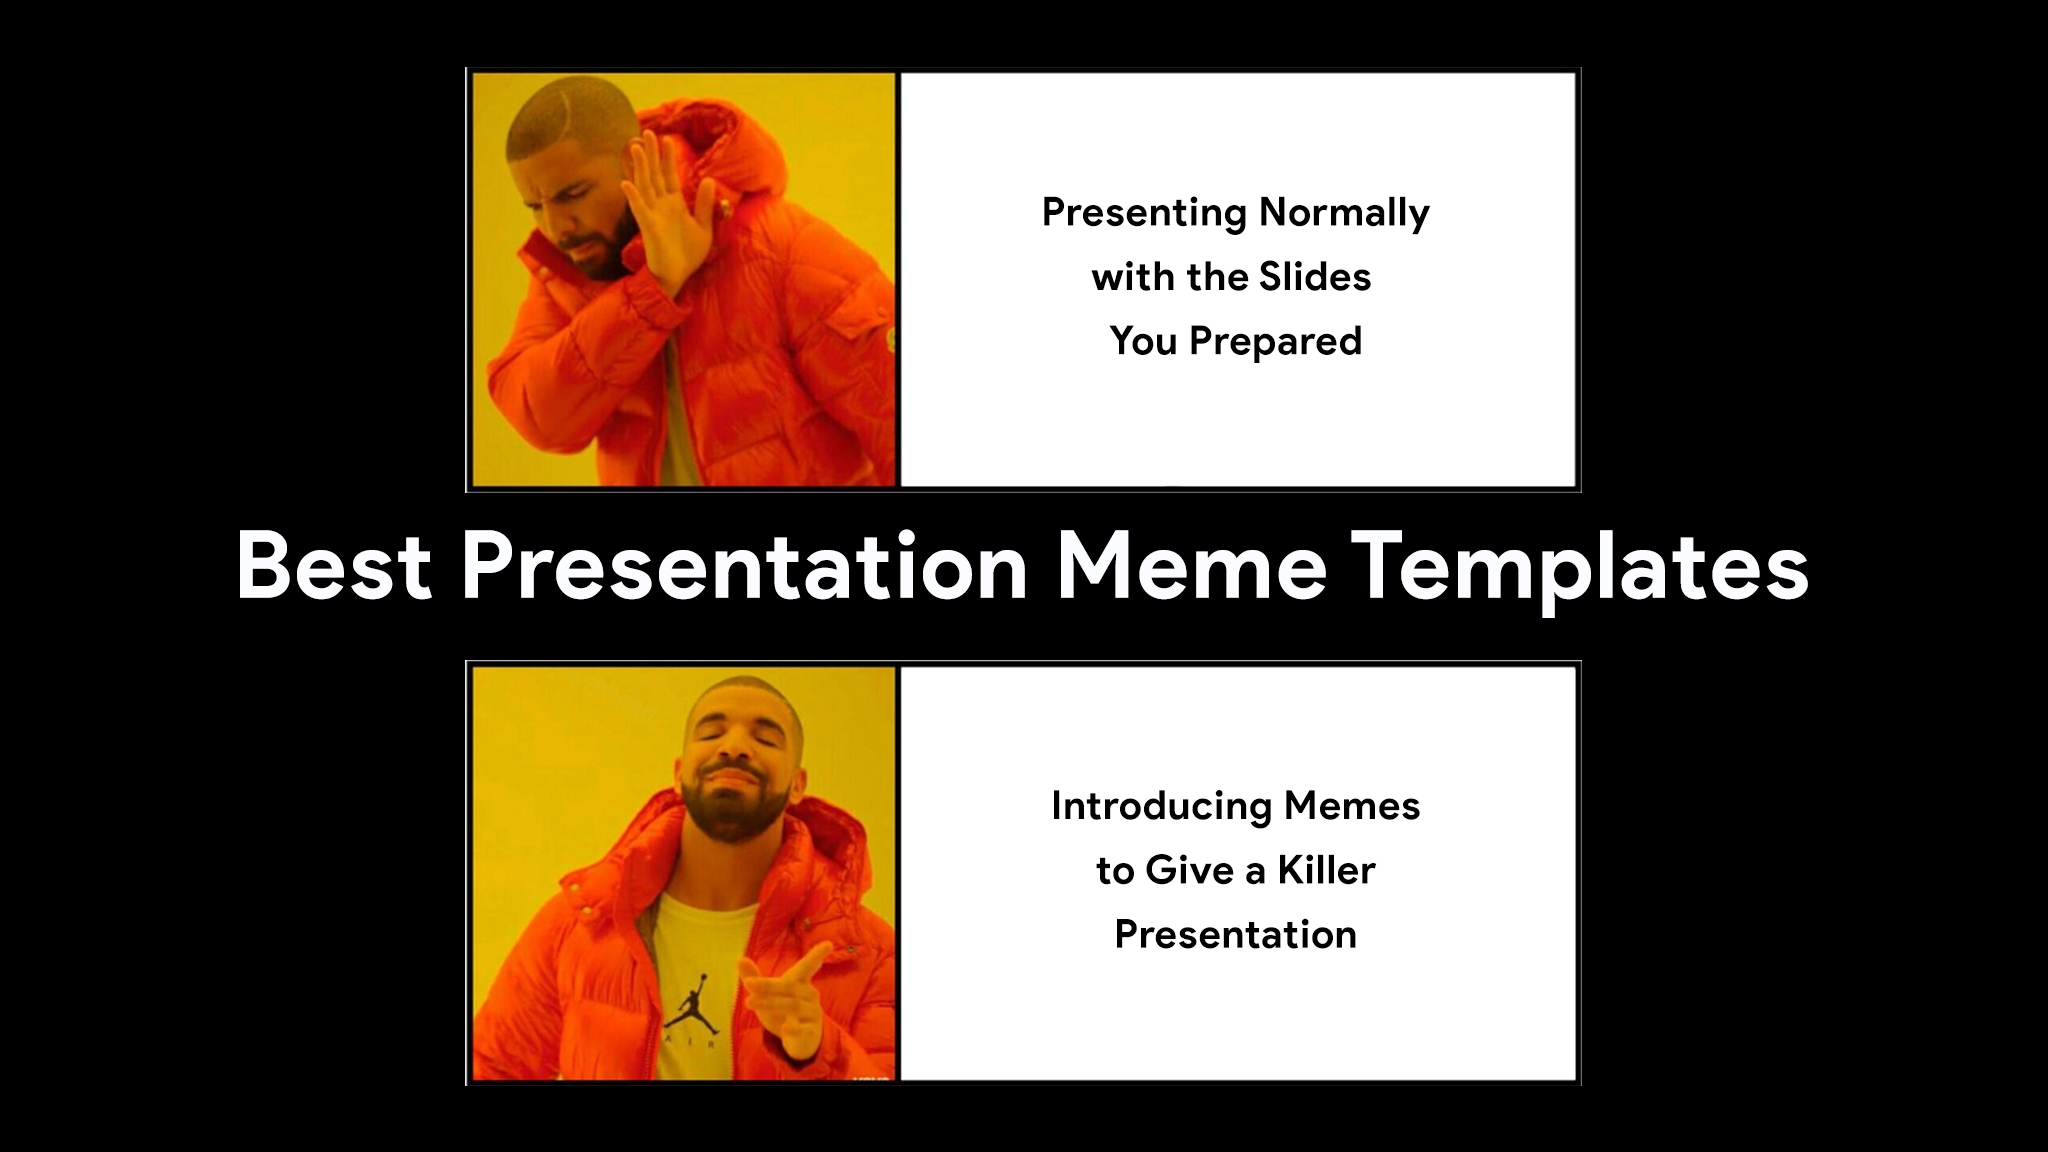 Best Presentation Meme